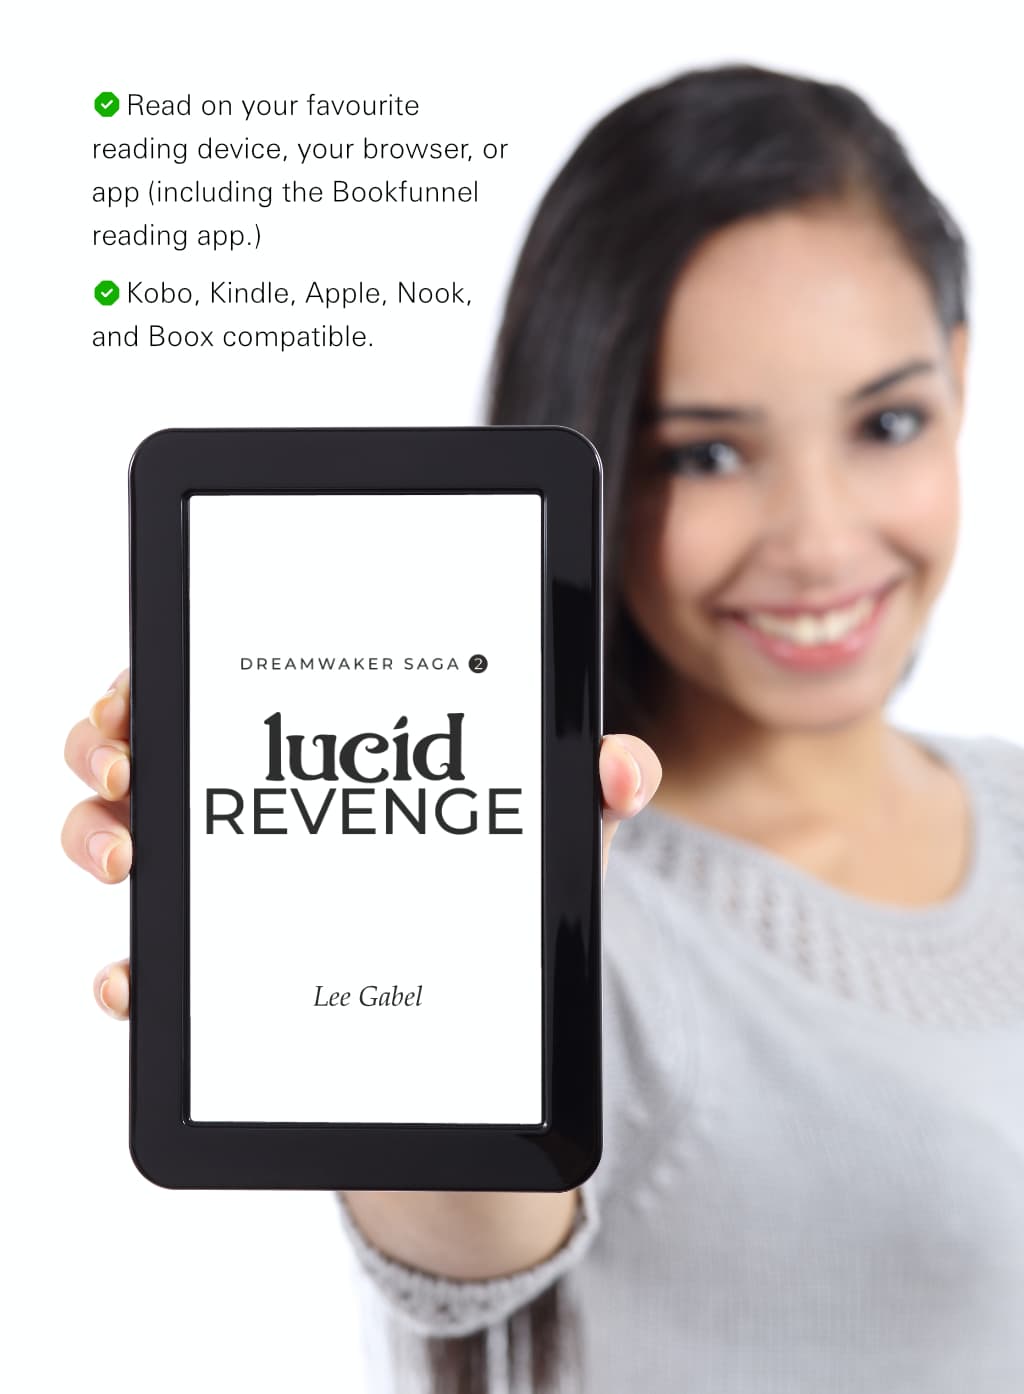 E-reader compatibility guarantee for Lucid Revenge e-book.